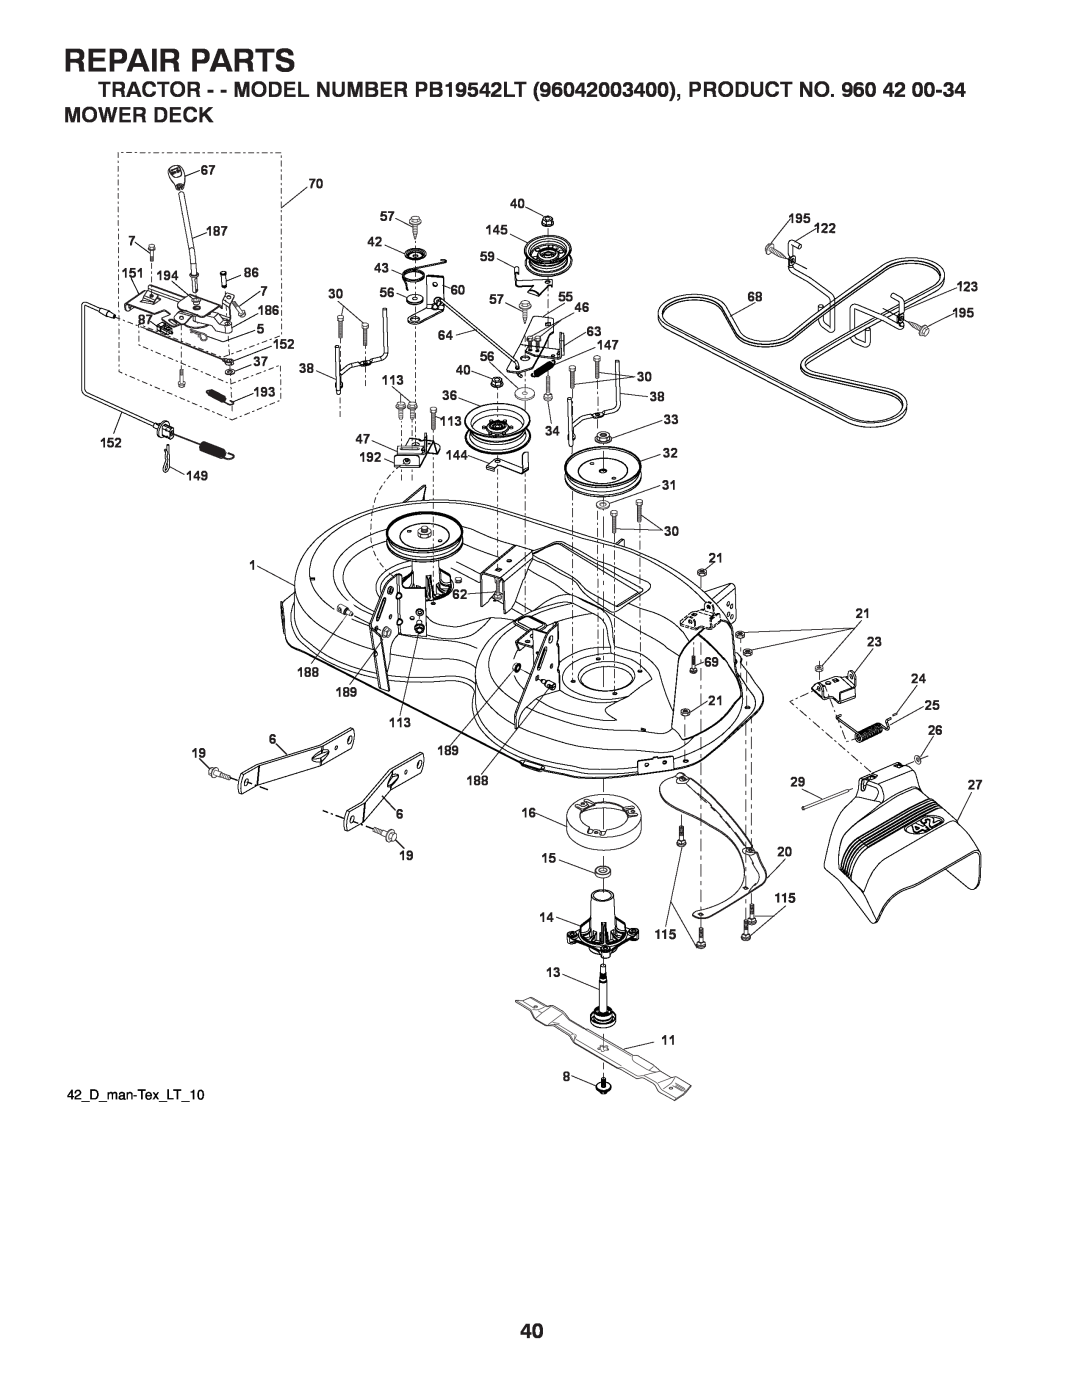 Poulan manual Mower Deck, Repair Parts, TRACTOR - - MODEL NUMBER PB19542LT 96042003400, PRODUCT NO, 189 113 189, 2927 